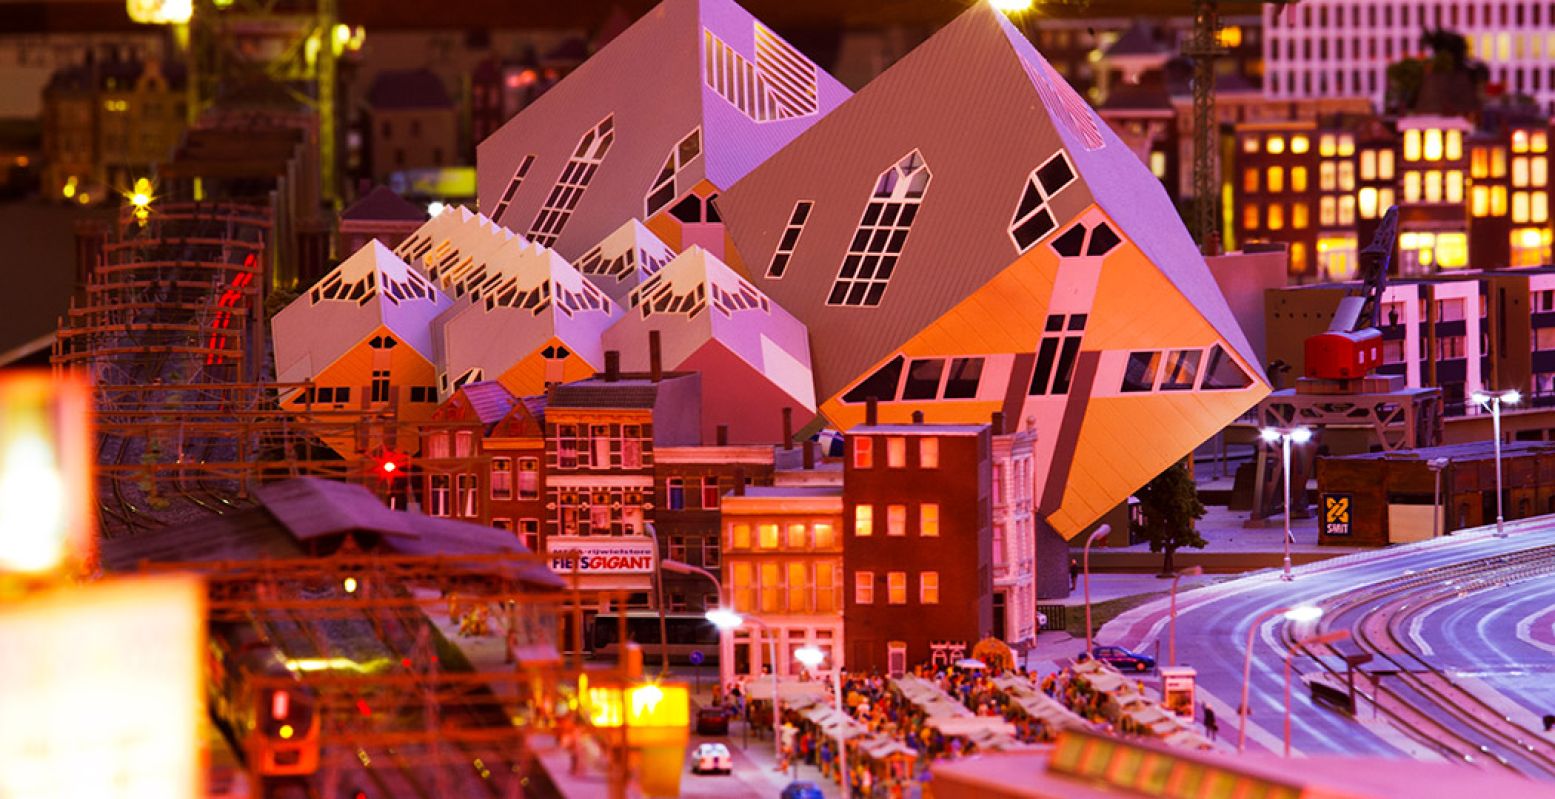 De bekende kubuswoningen van Rotterdam by night. Foto: MiniWorld Rotterdam © Tarik Speelman